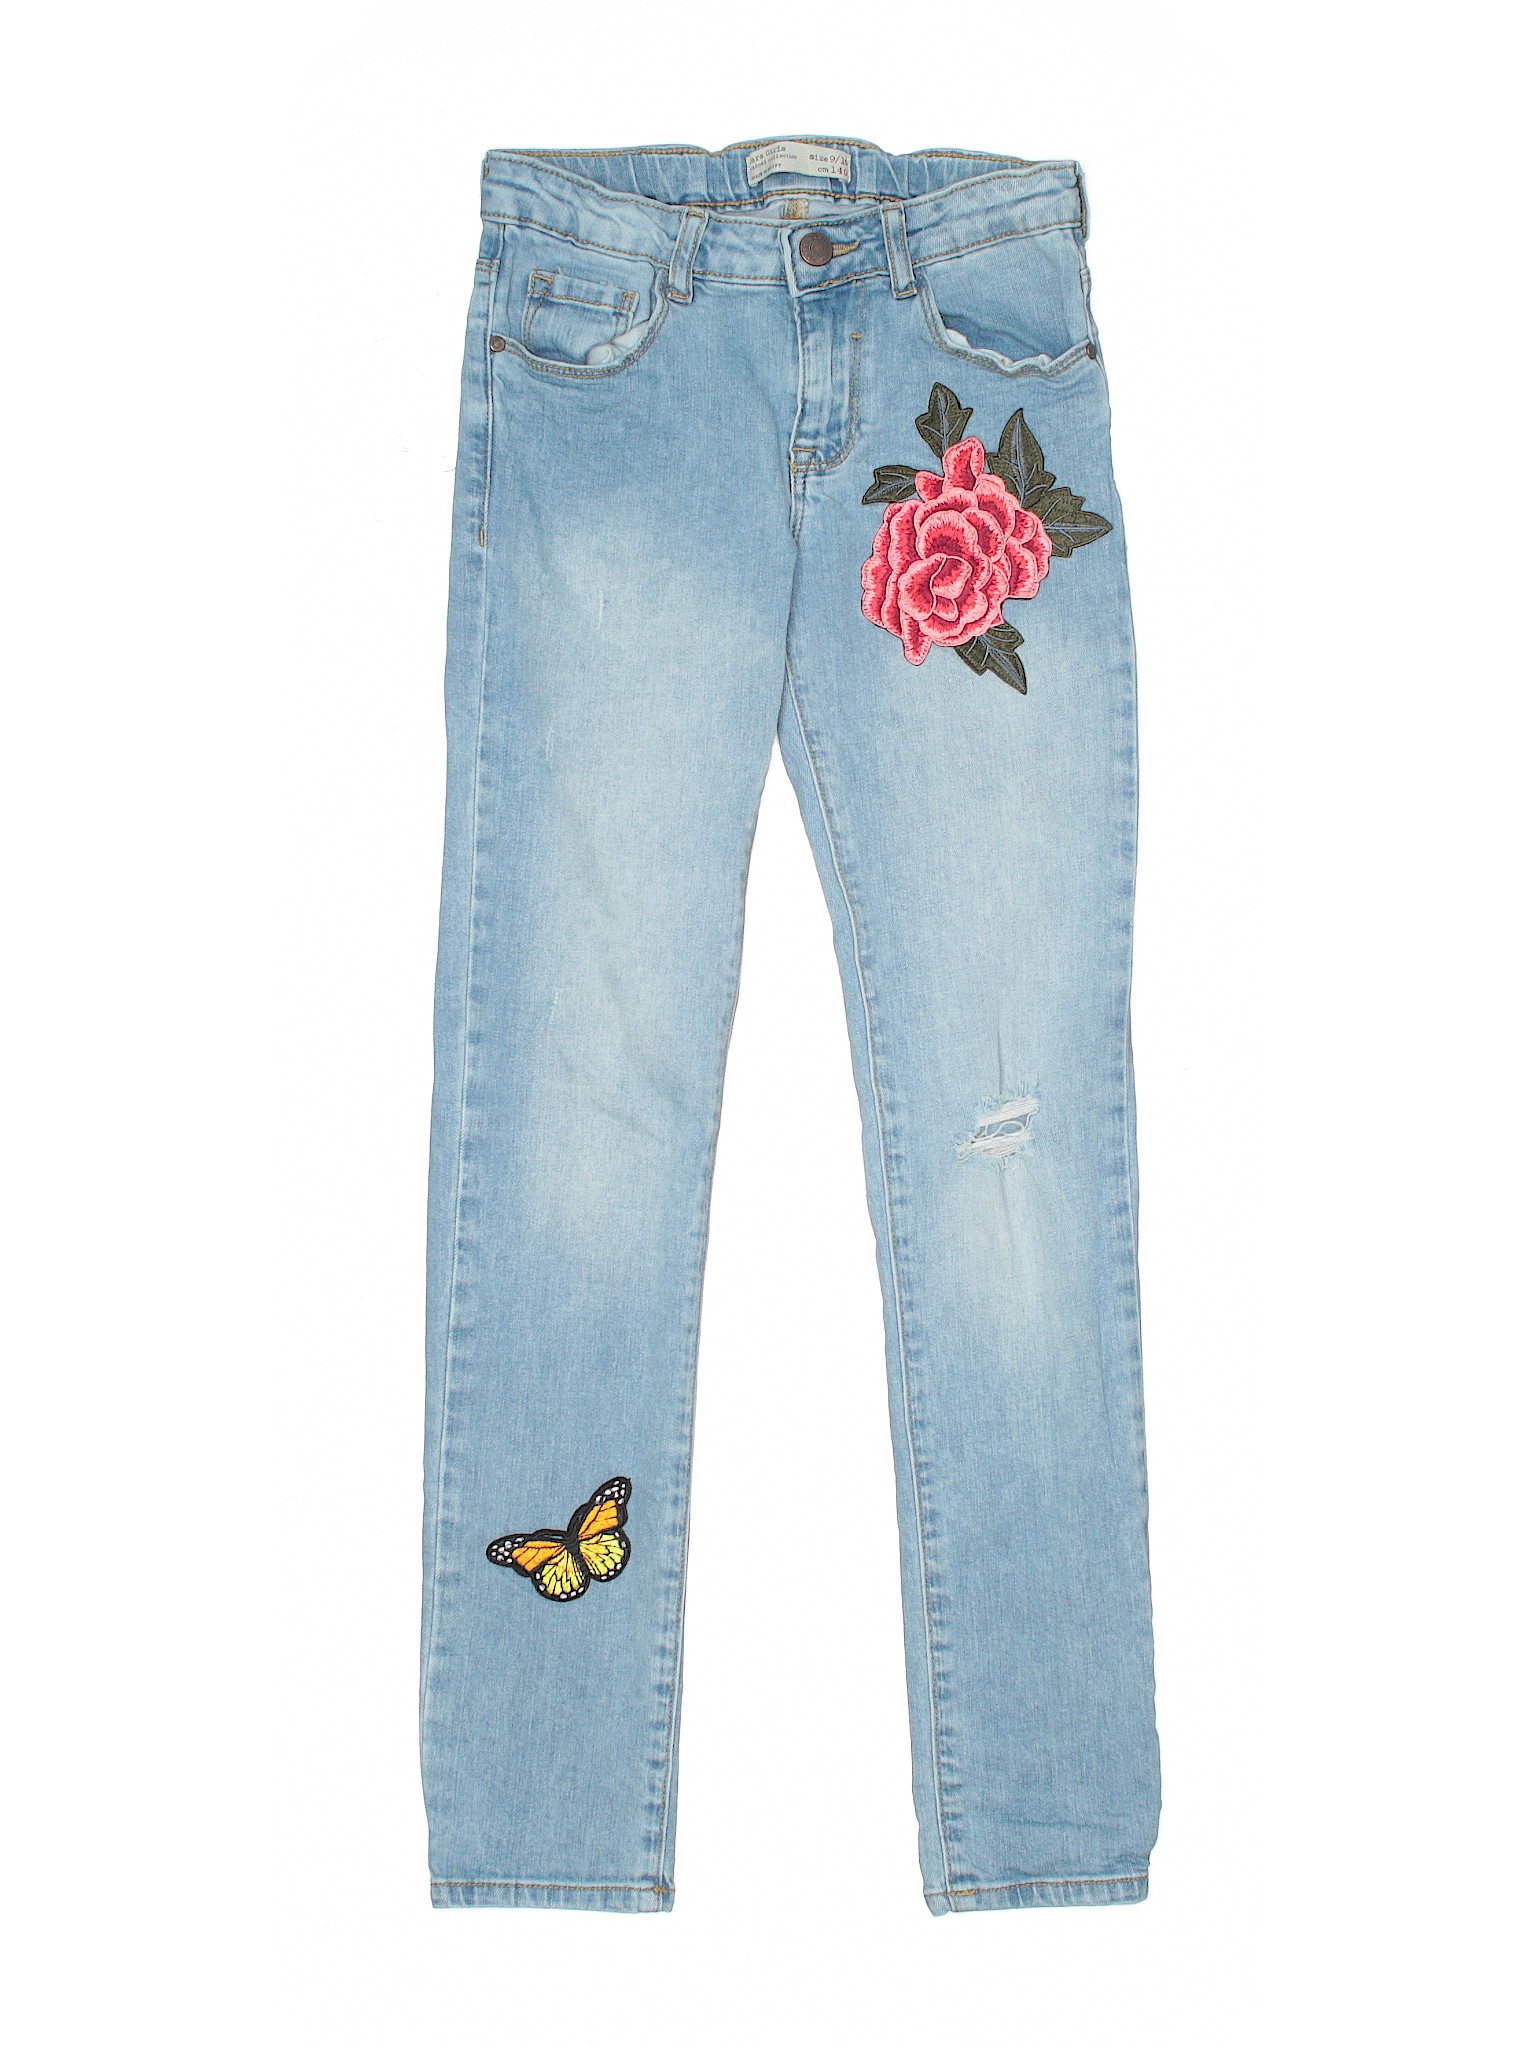 Zara Kids Girls Blue Jeans 9 Ebay